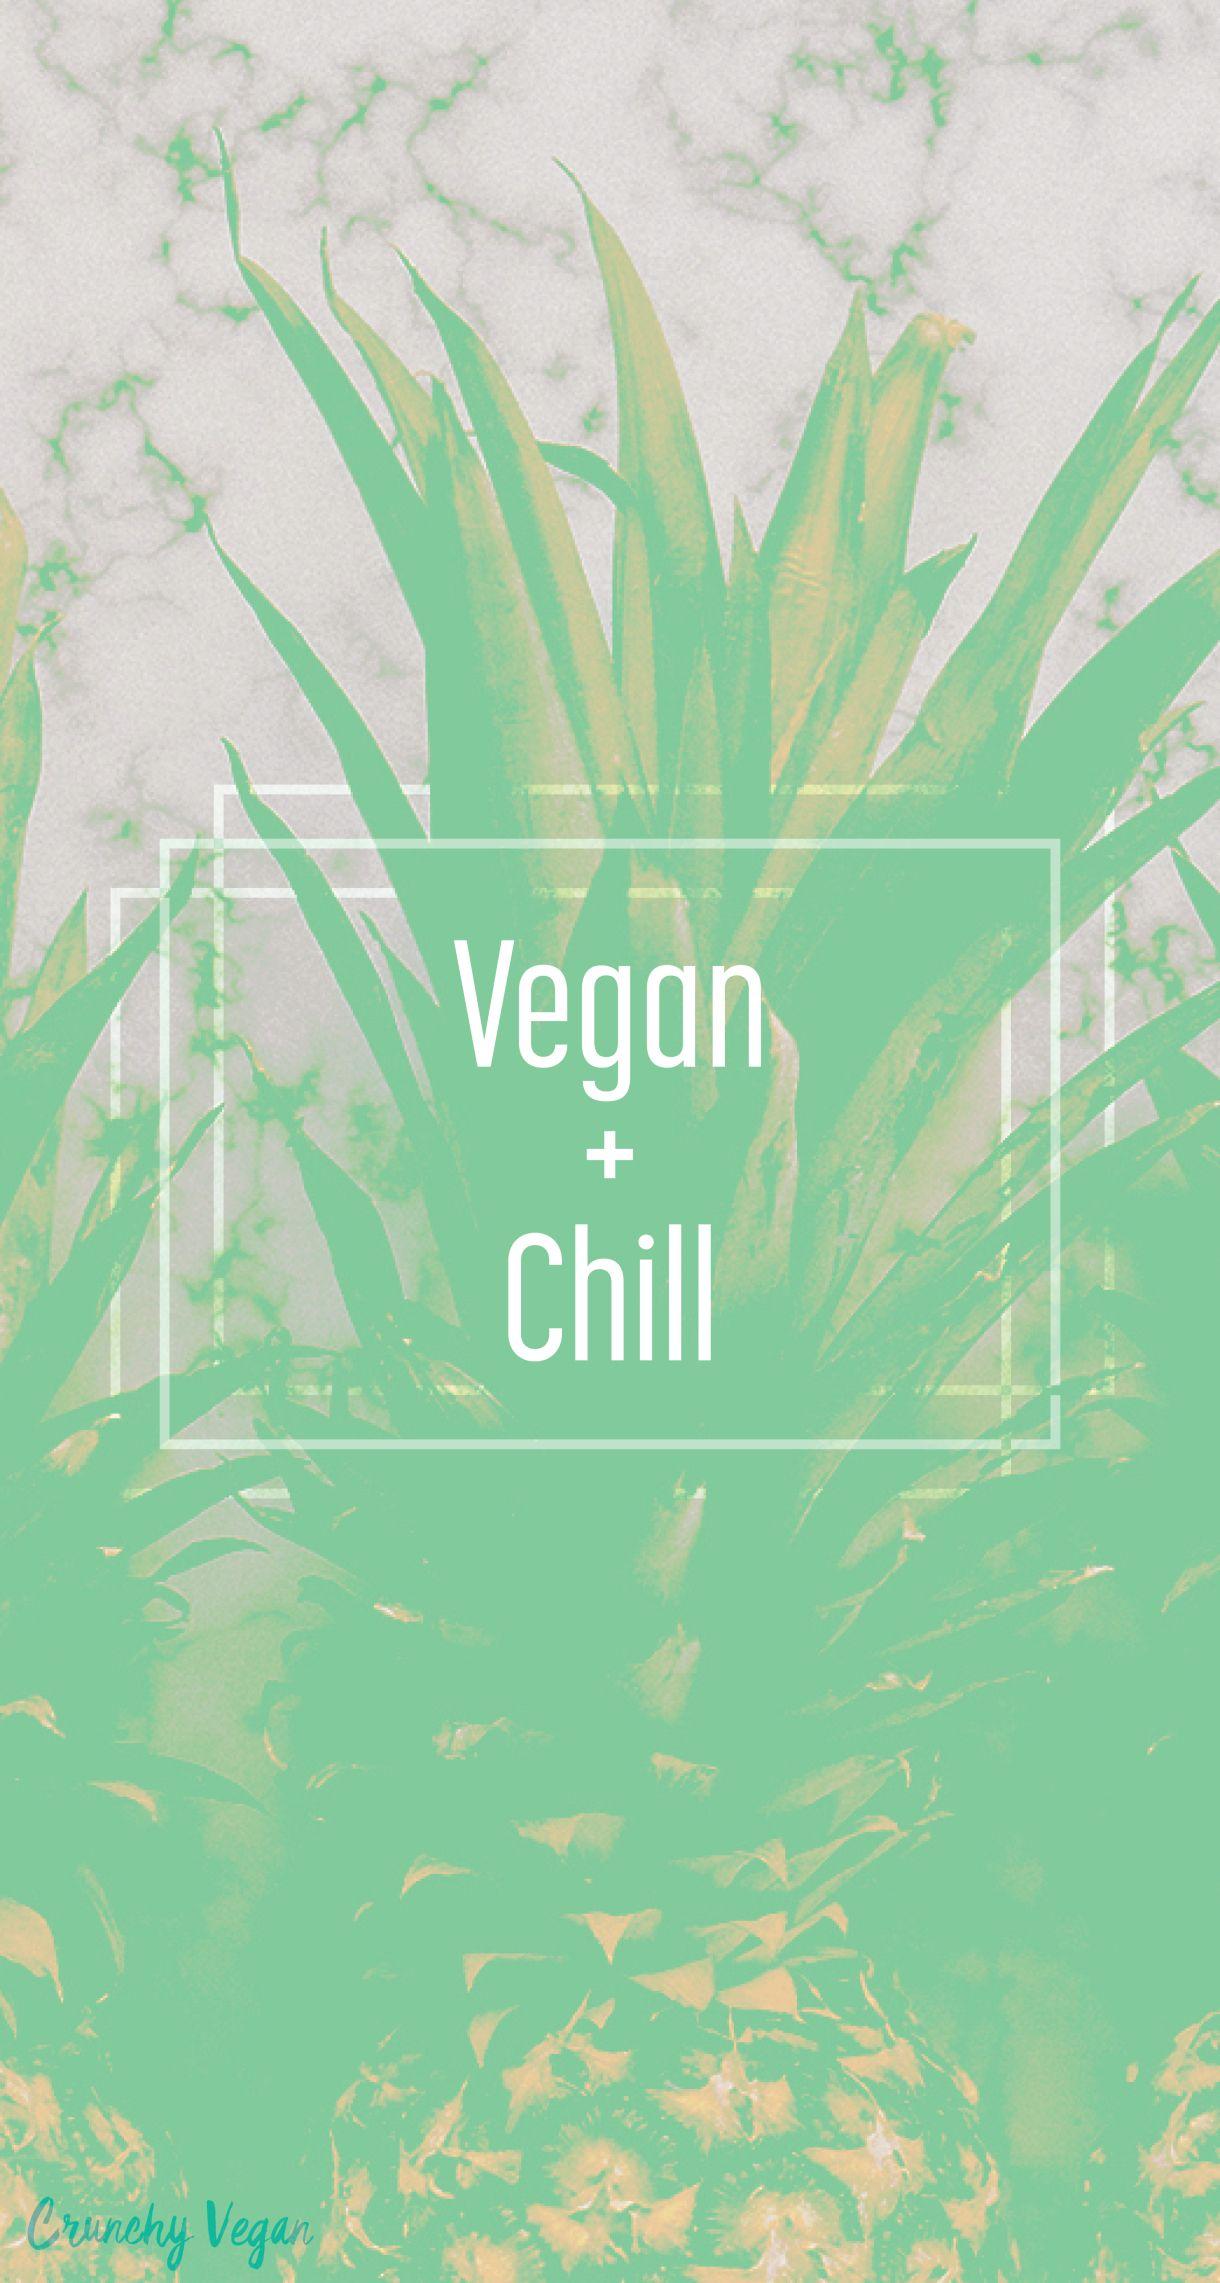 vegan and chill phone wallpaper from Crunchy Vegan